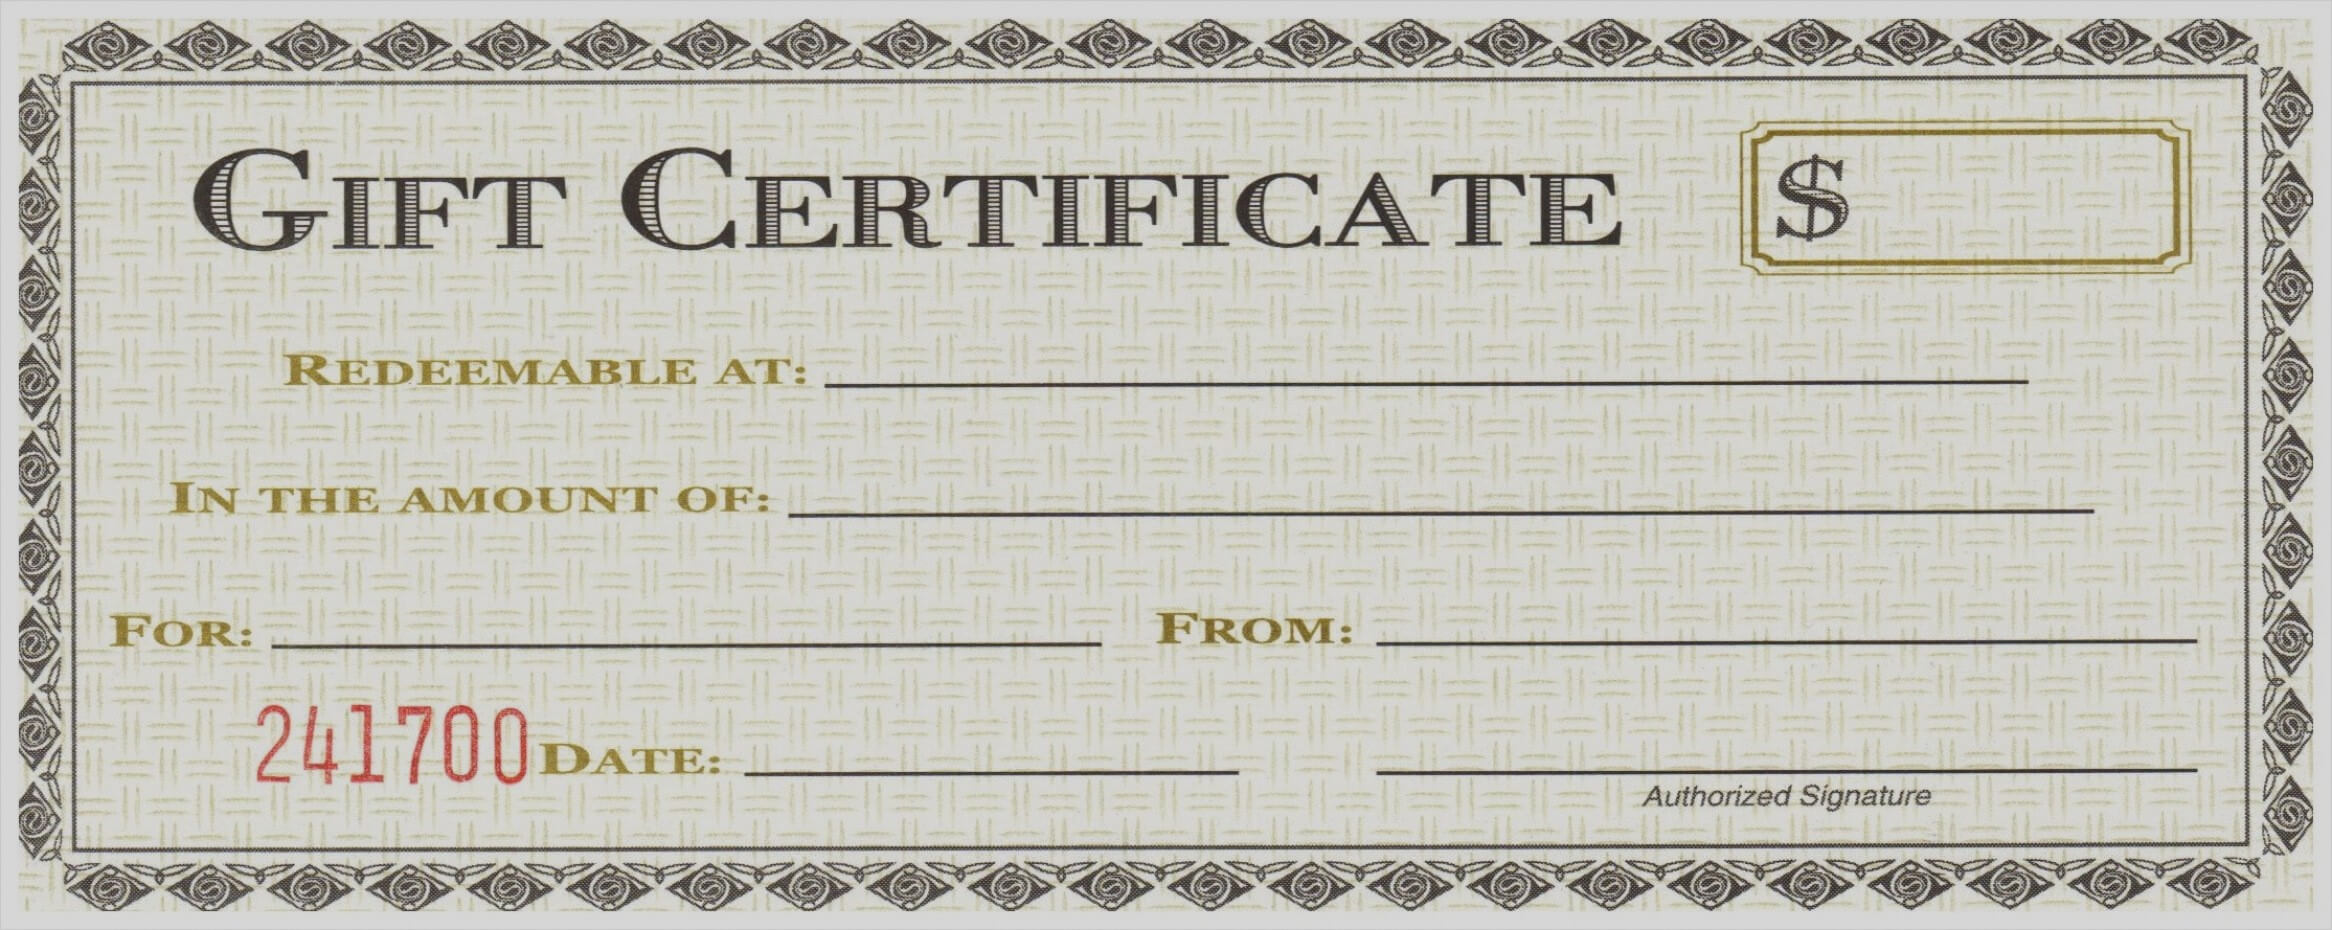 Print Gift Vouchers Online Free | Certificatetemplategift Regarding Printable Gift Certificates Templates Free